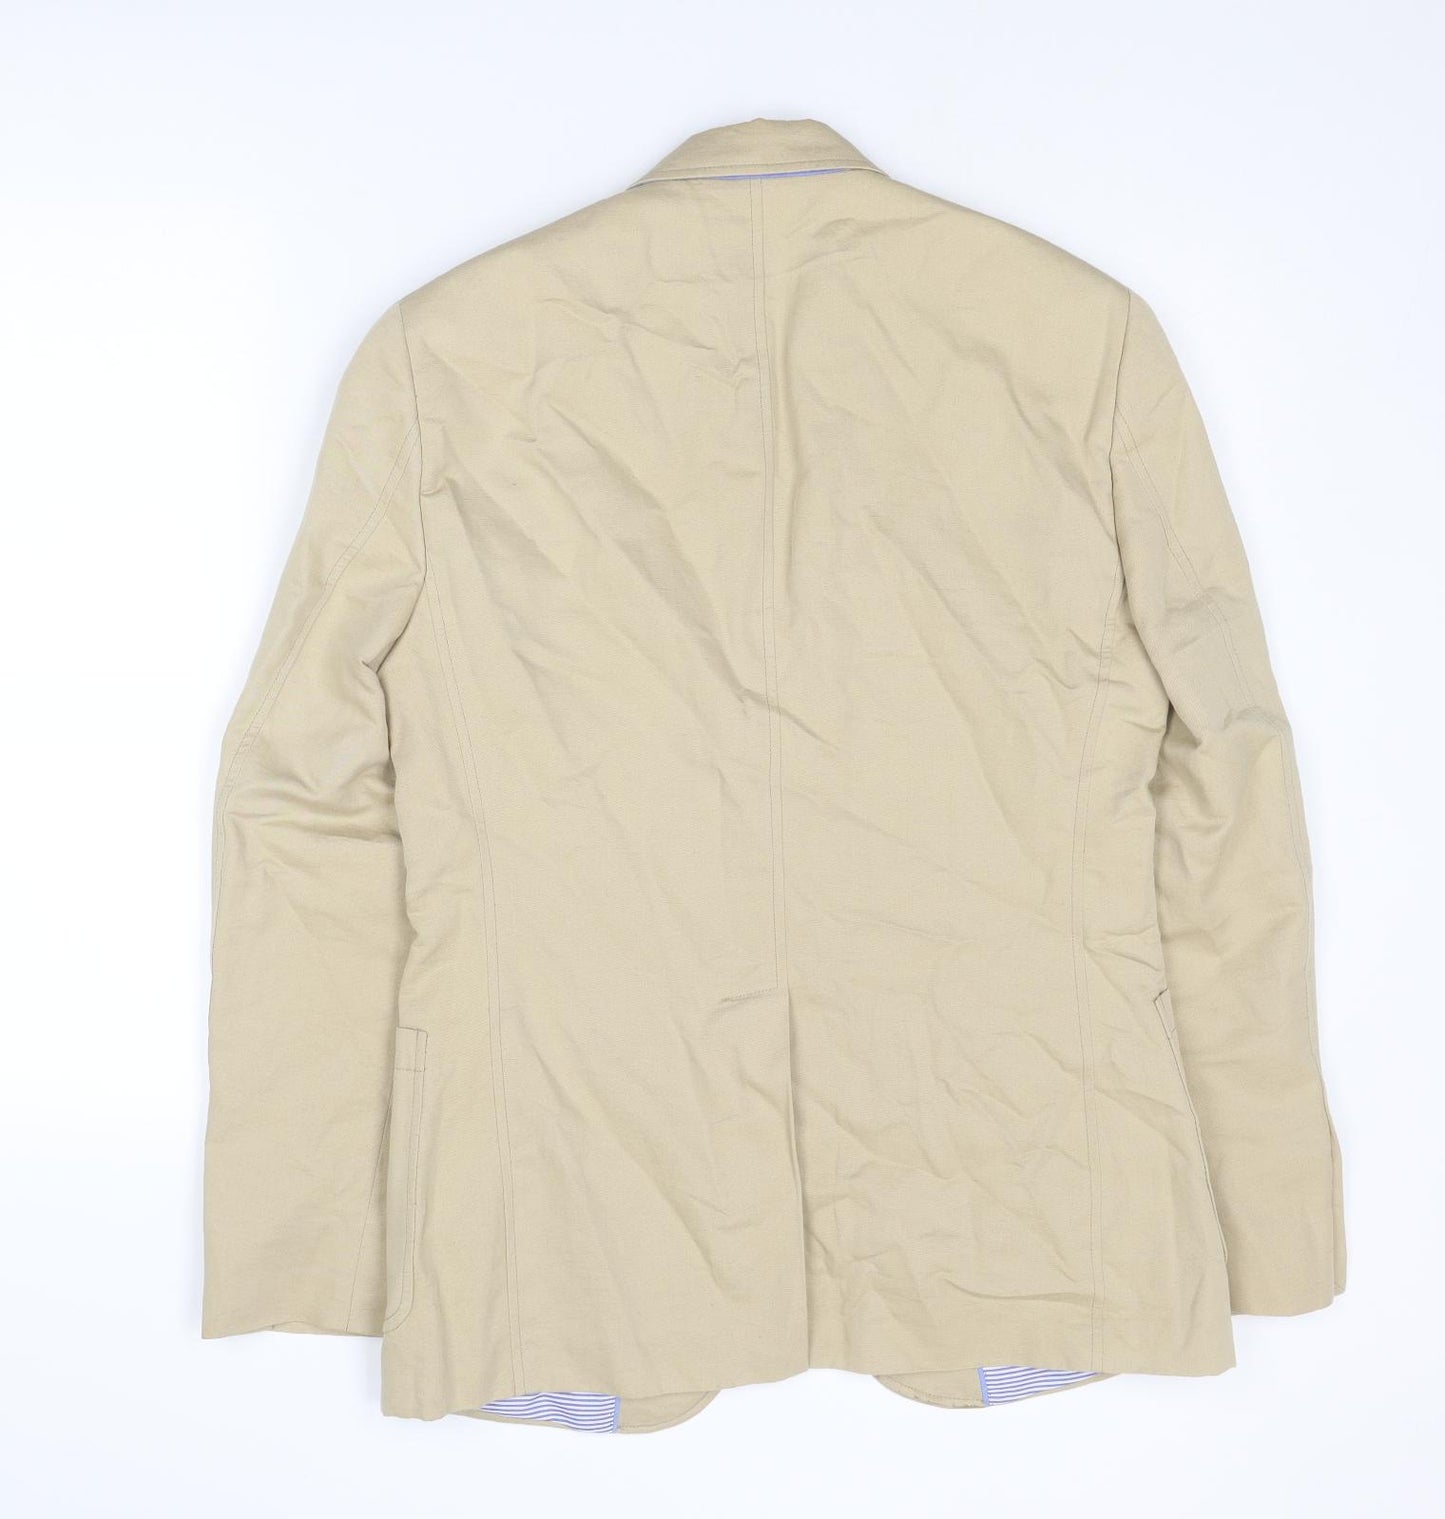 Crew Clothing Mens Beige Cotton Jacket Suit Jacket Size 38 Regular